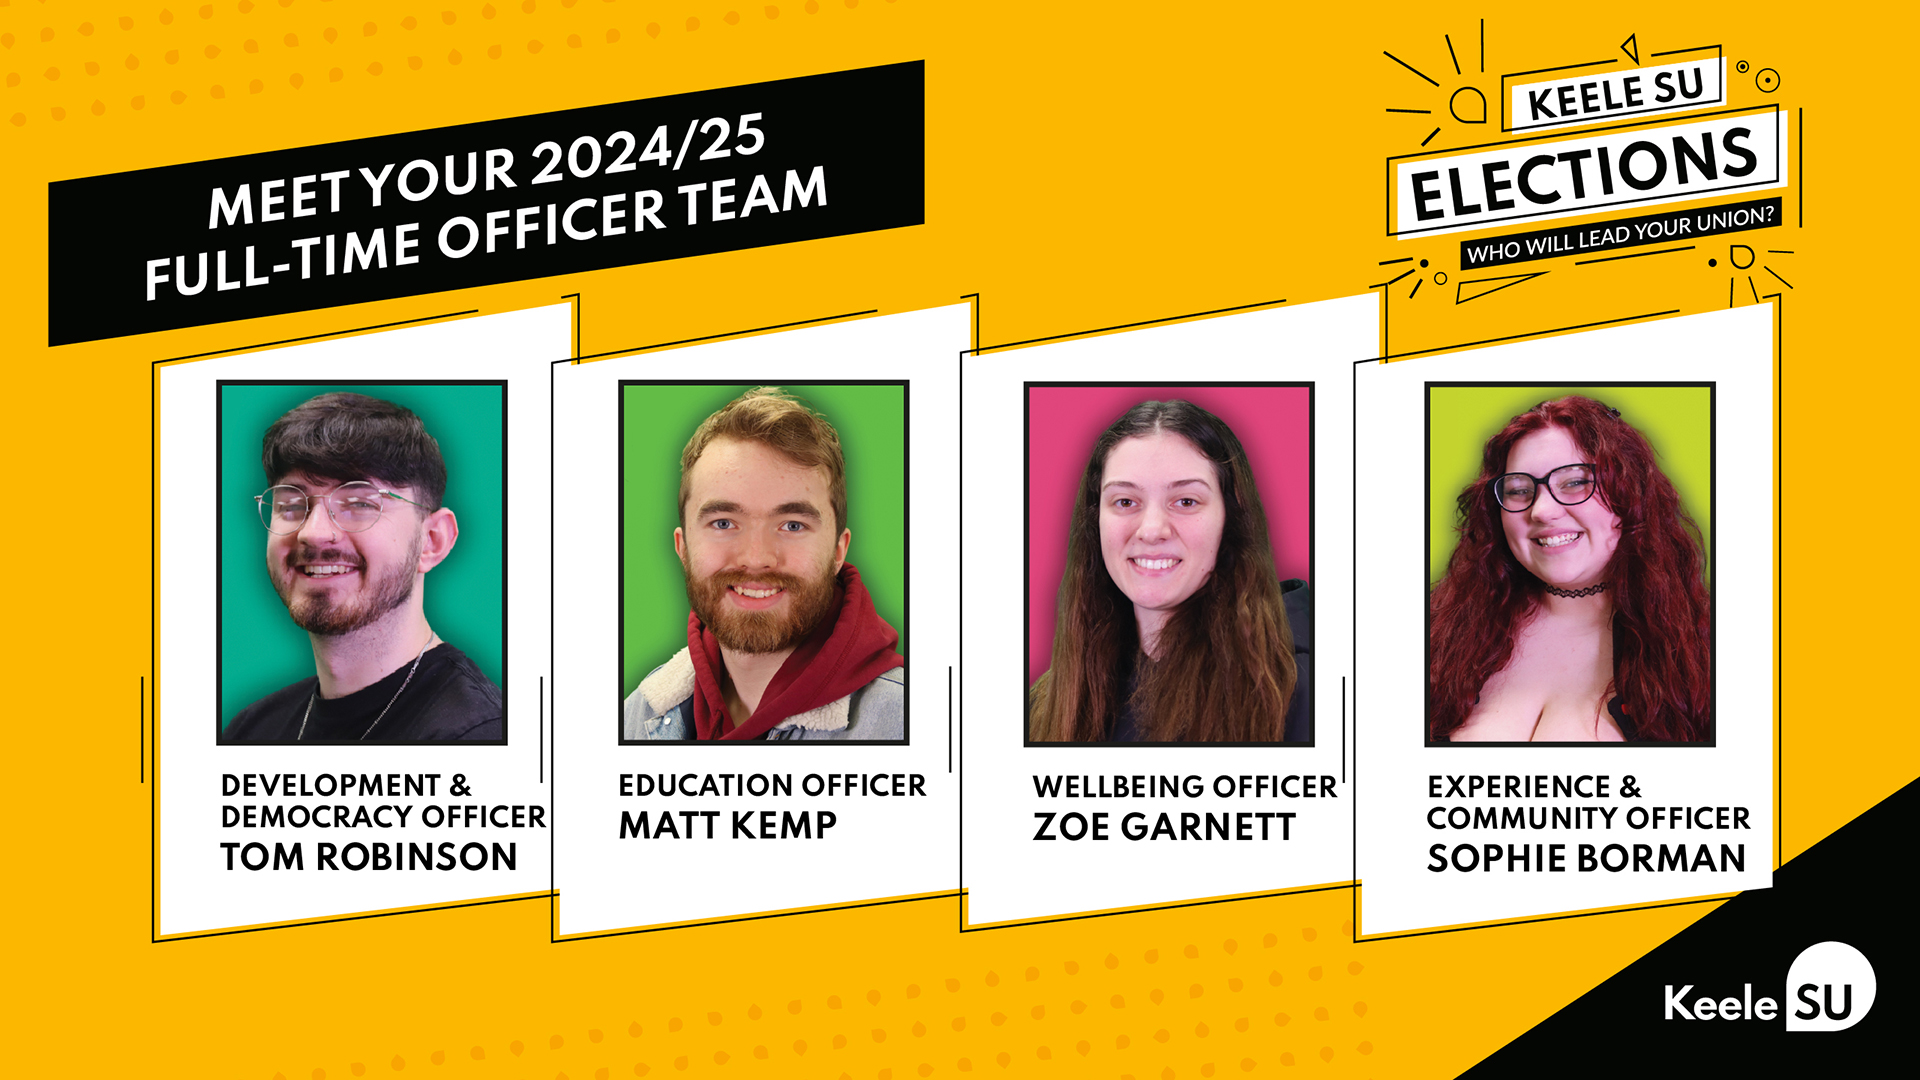 Meet Next Year's Elected Officers! Tom Robinson, Matt Kemp, Zoe Garnett, Sophie Borman.